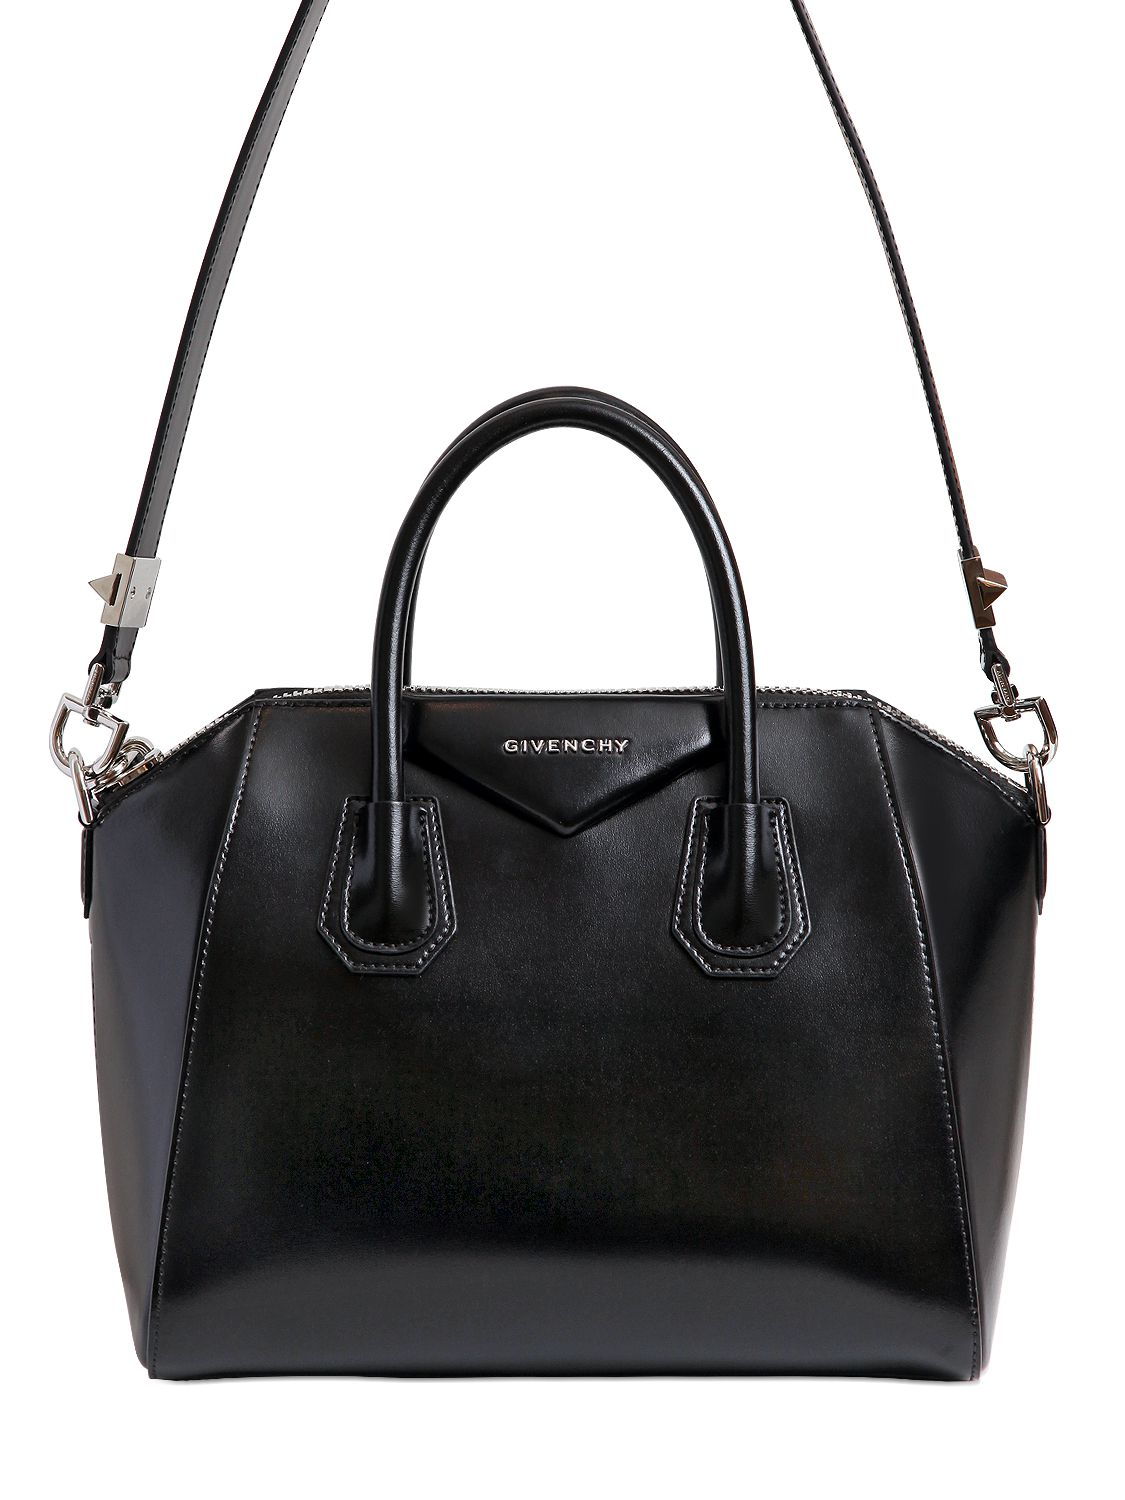 Givenchy Small Antigona Shiny Leather Bag in Black | Lyst